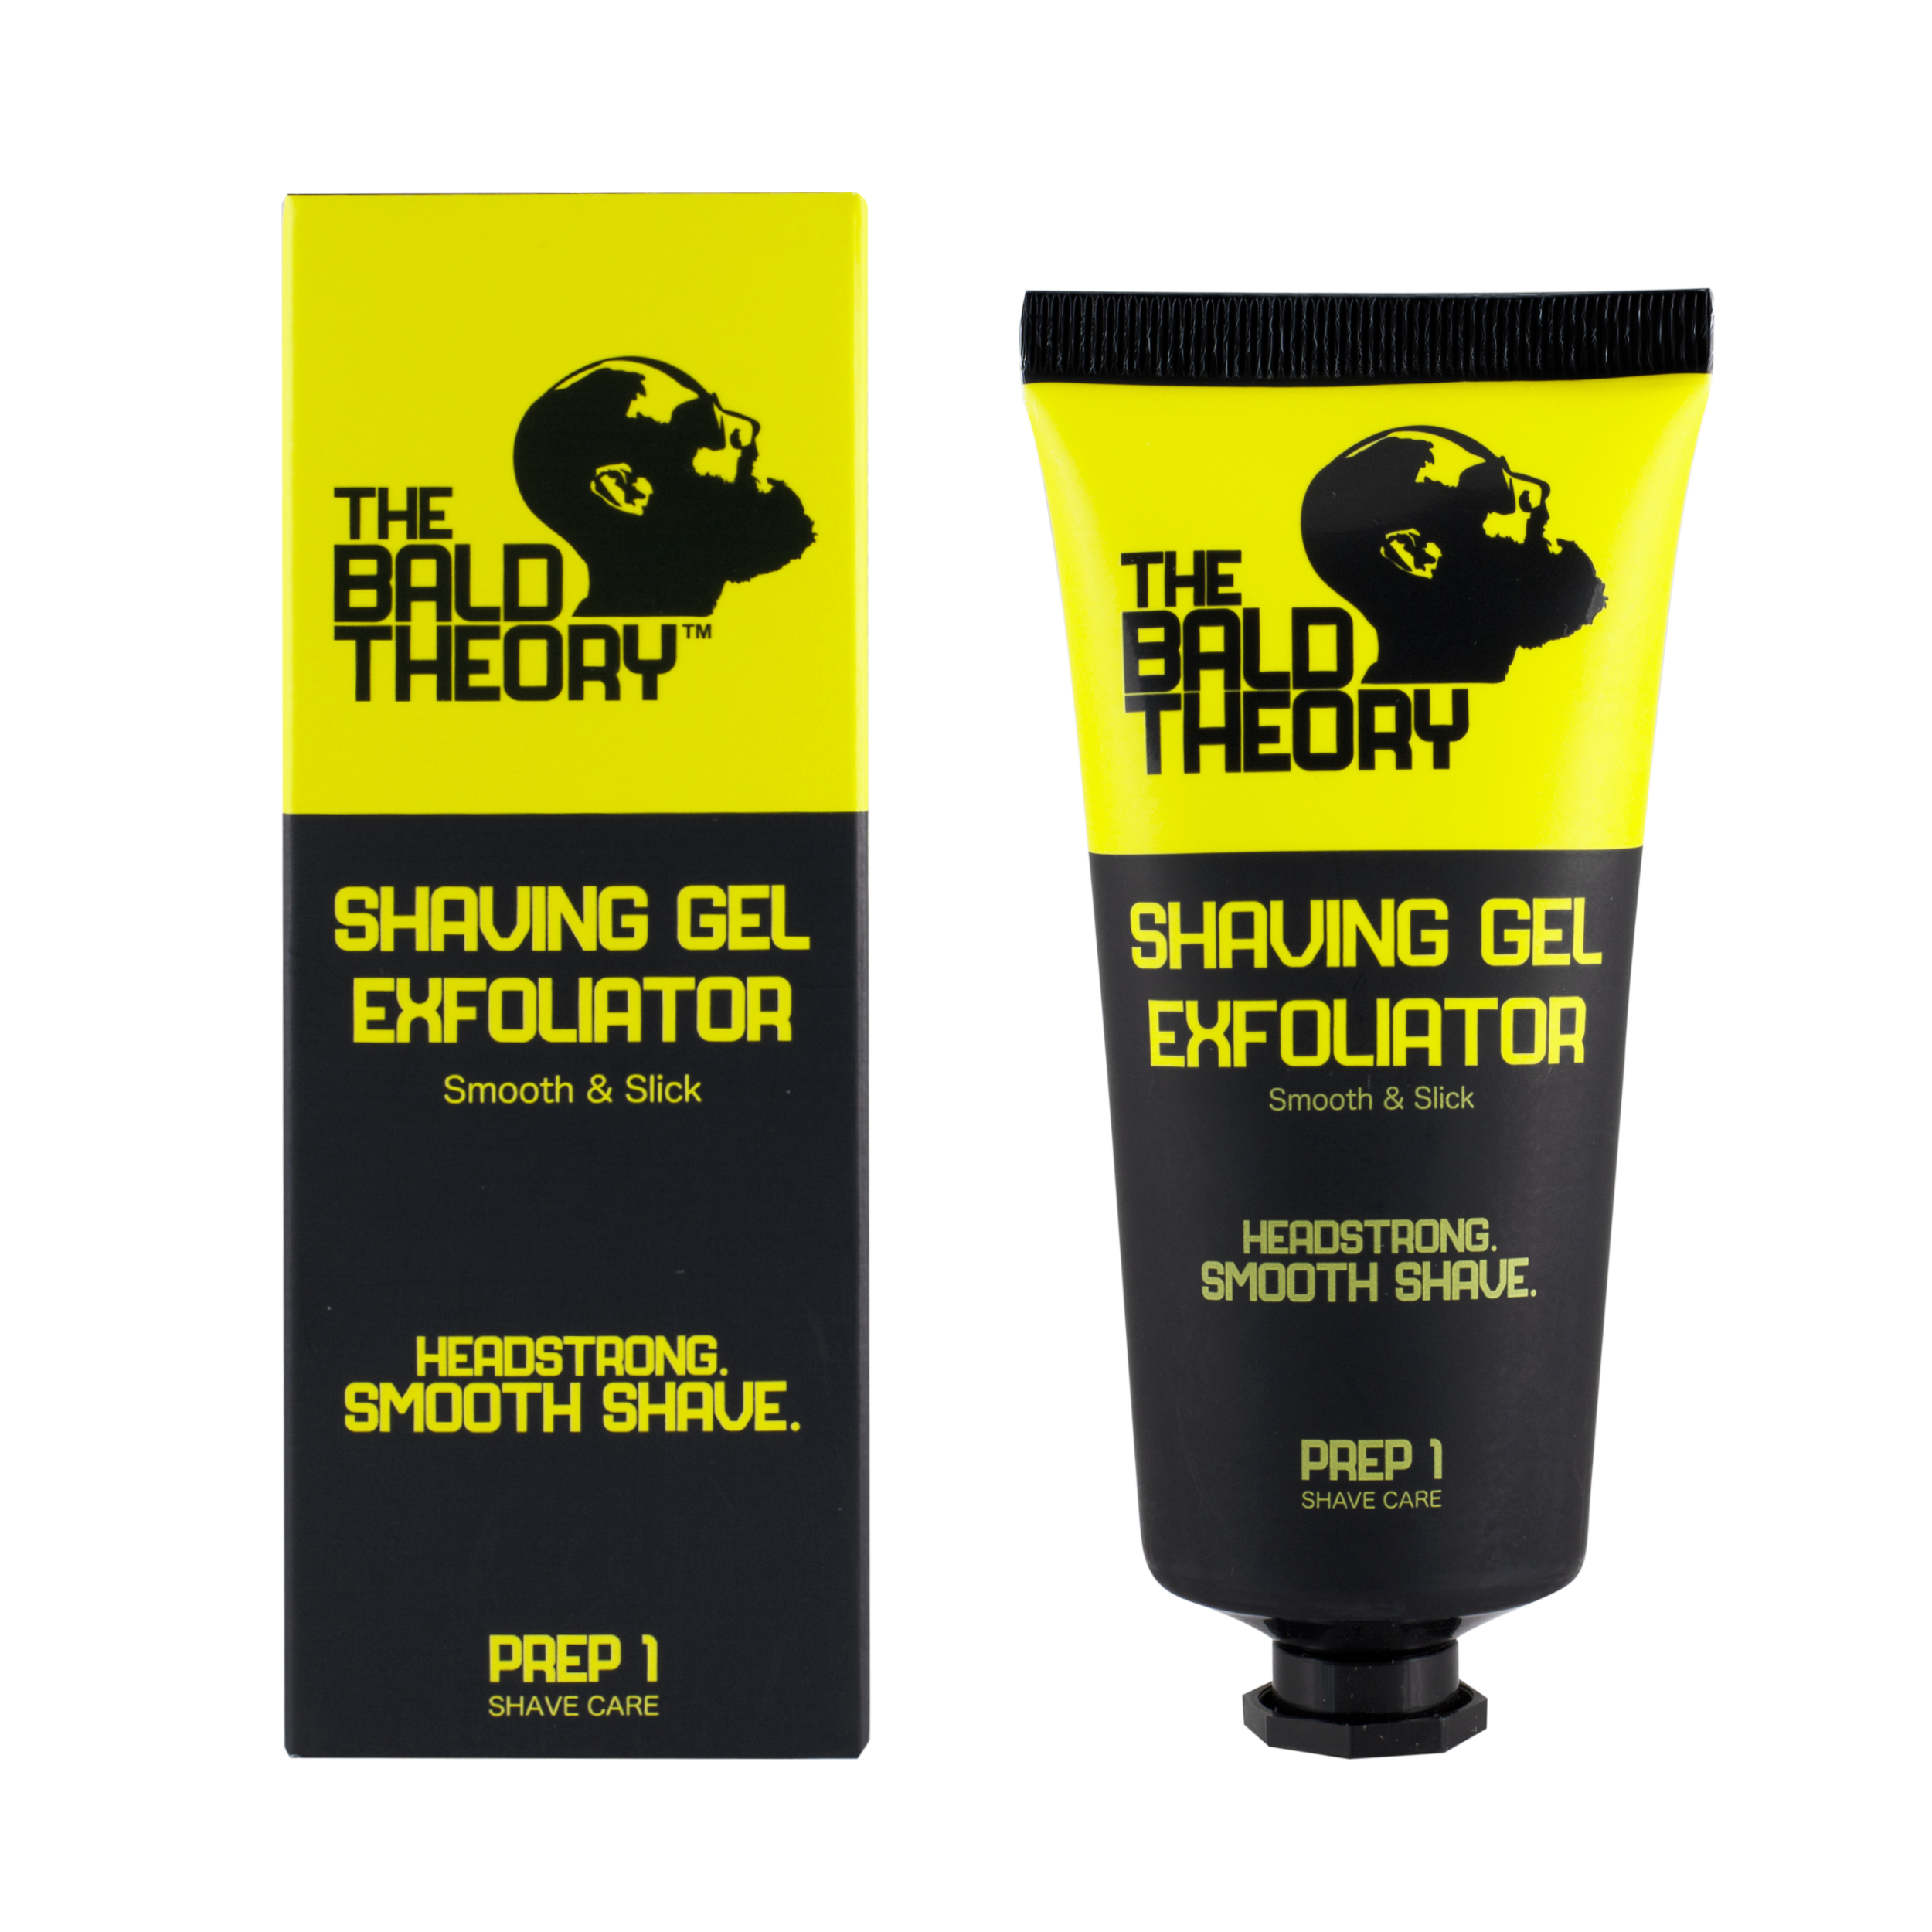 THE BALD THEORY Shaving Gel Exfoliator